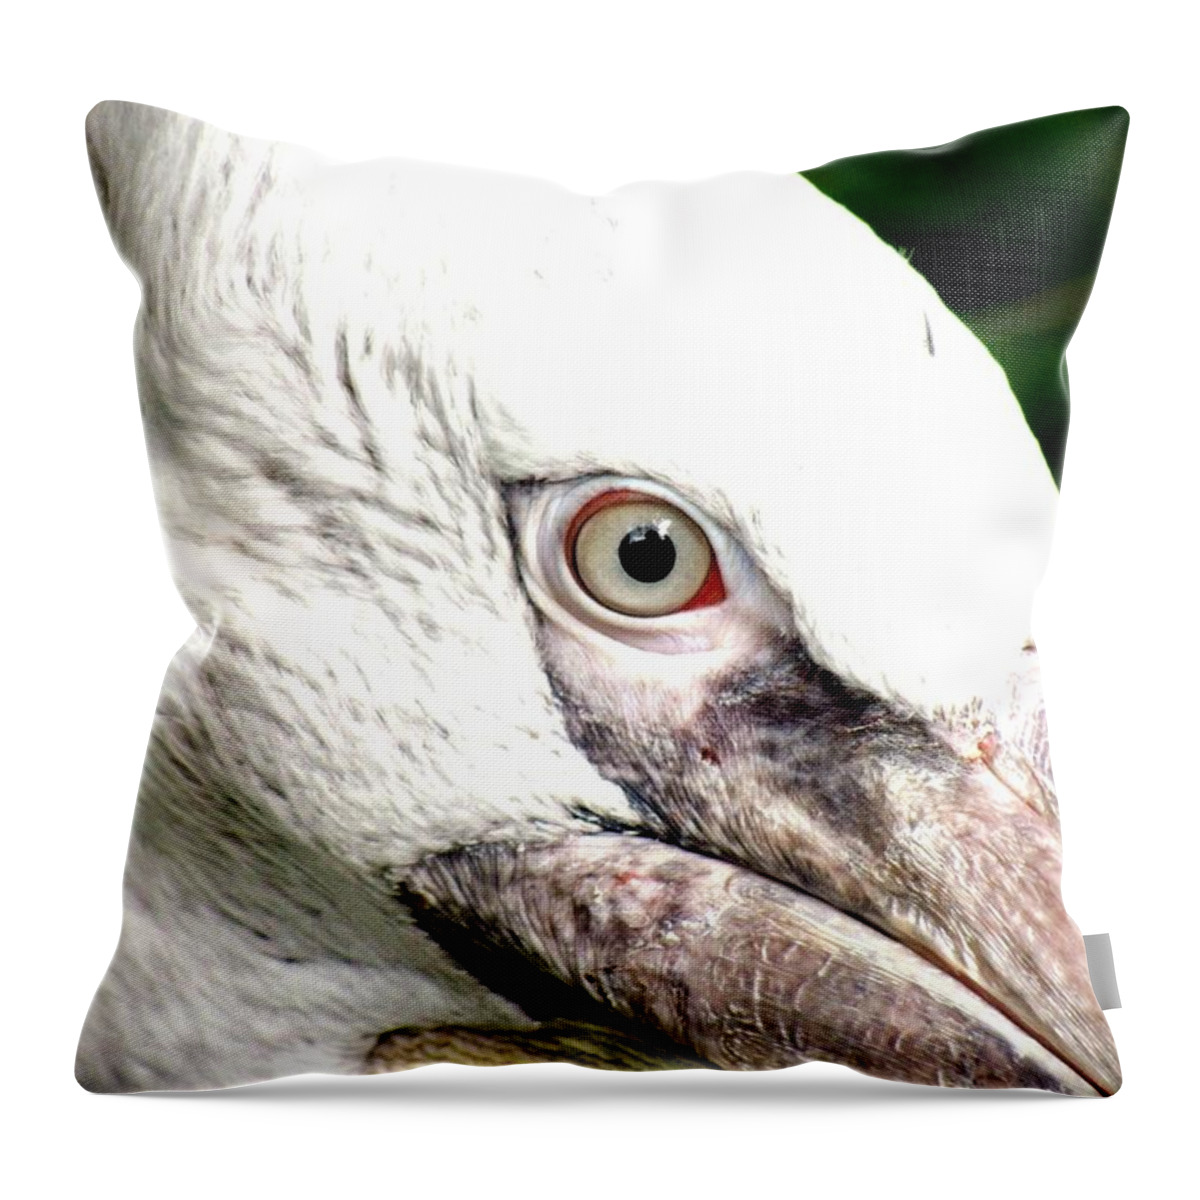 Bird Throw Pillow featuring the photograph Bird Eye View by Leah Mihuc